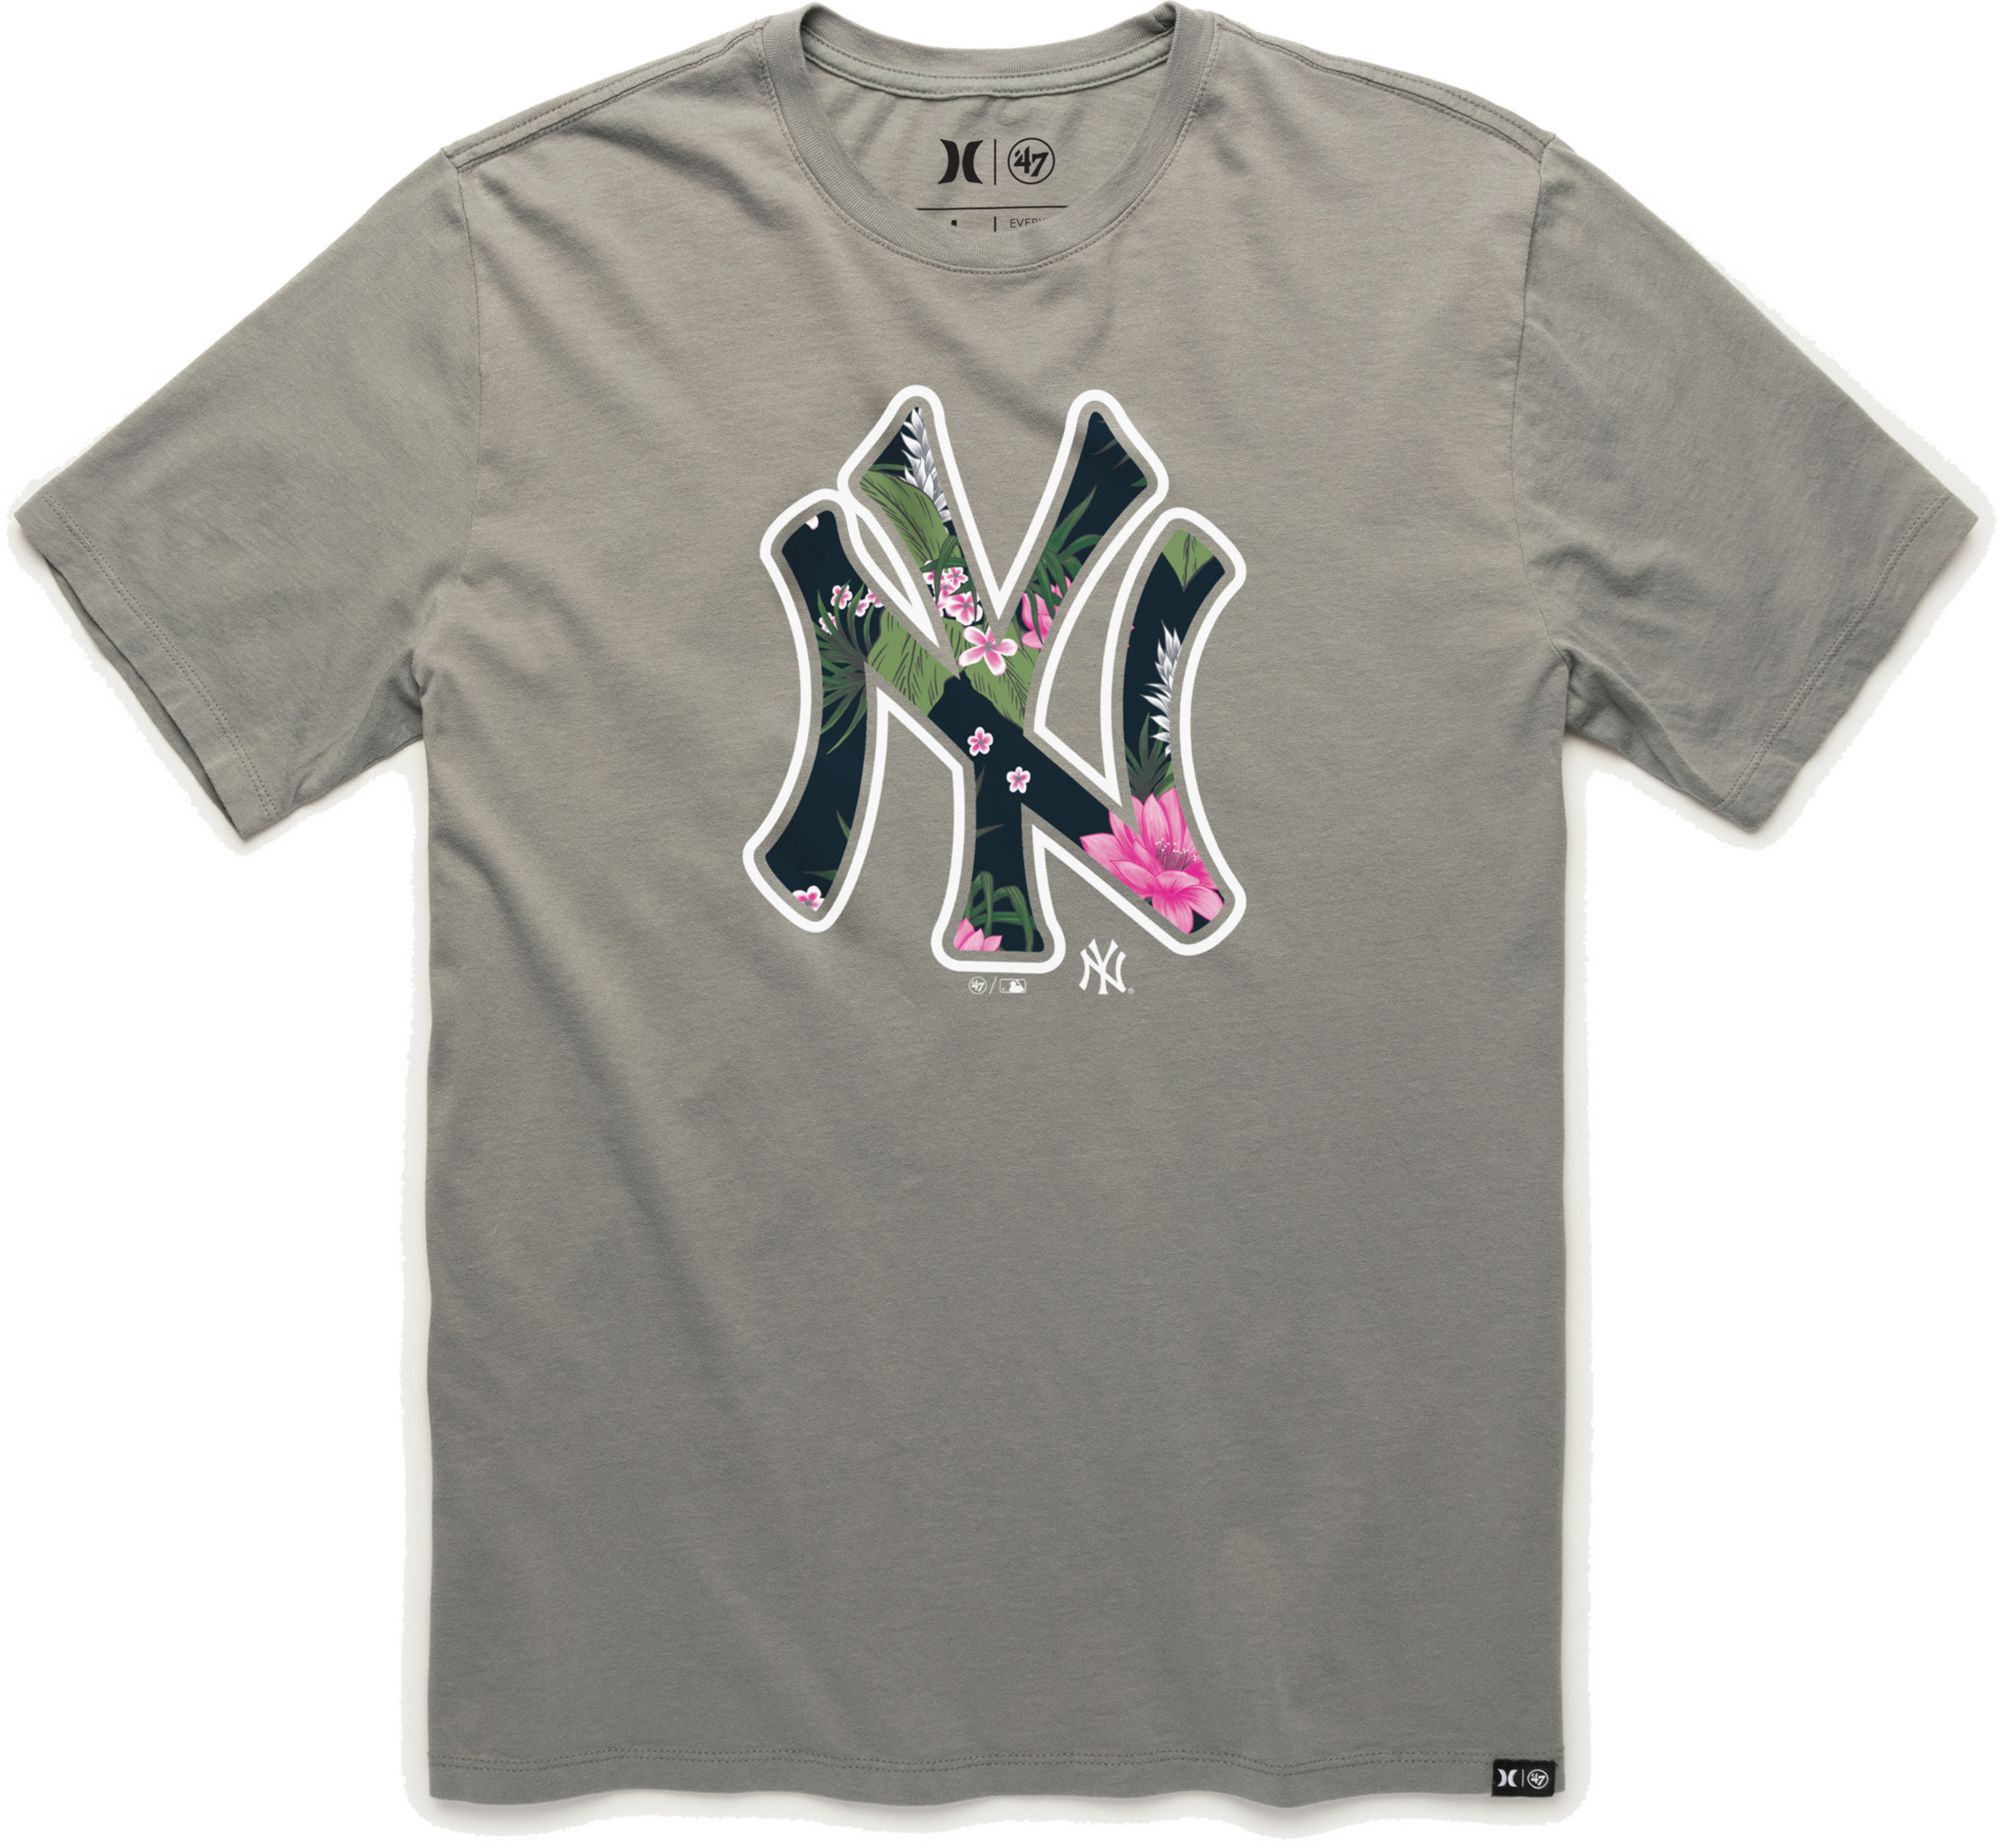 Nike Dri-FIT Icon Legend (MLB Oakland Athletics) Men's T-Shirt